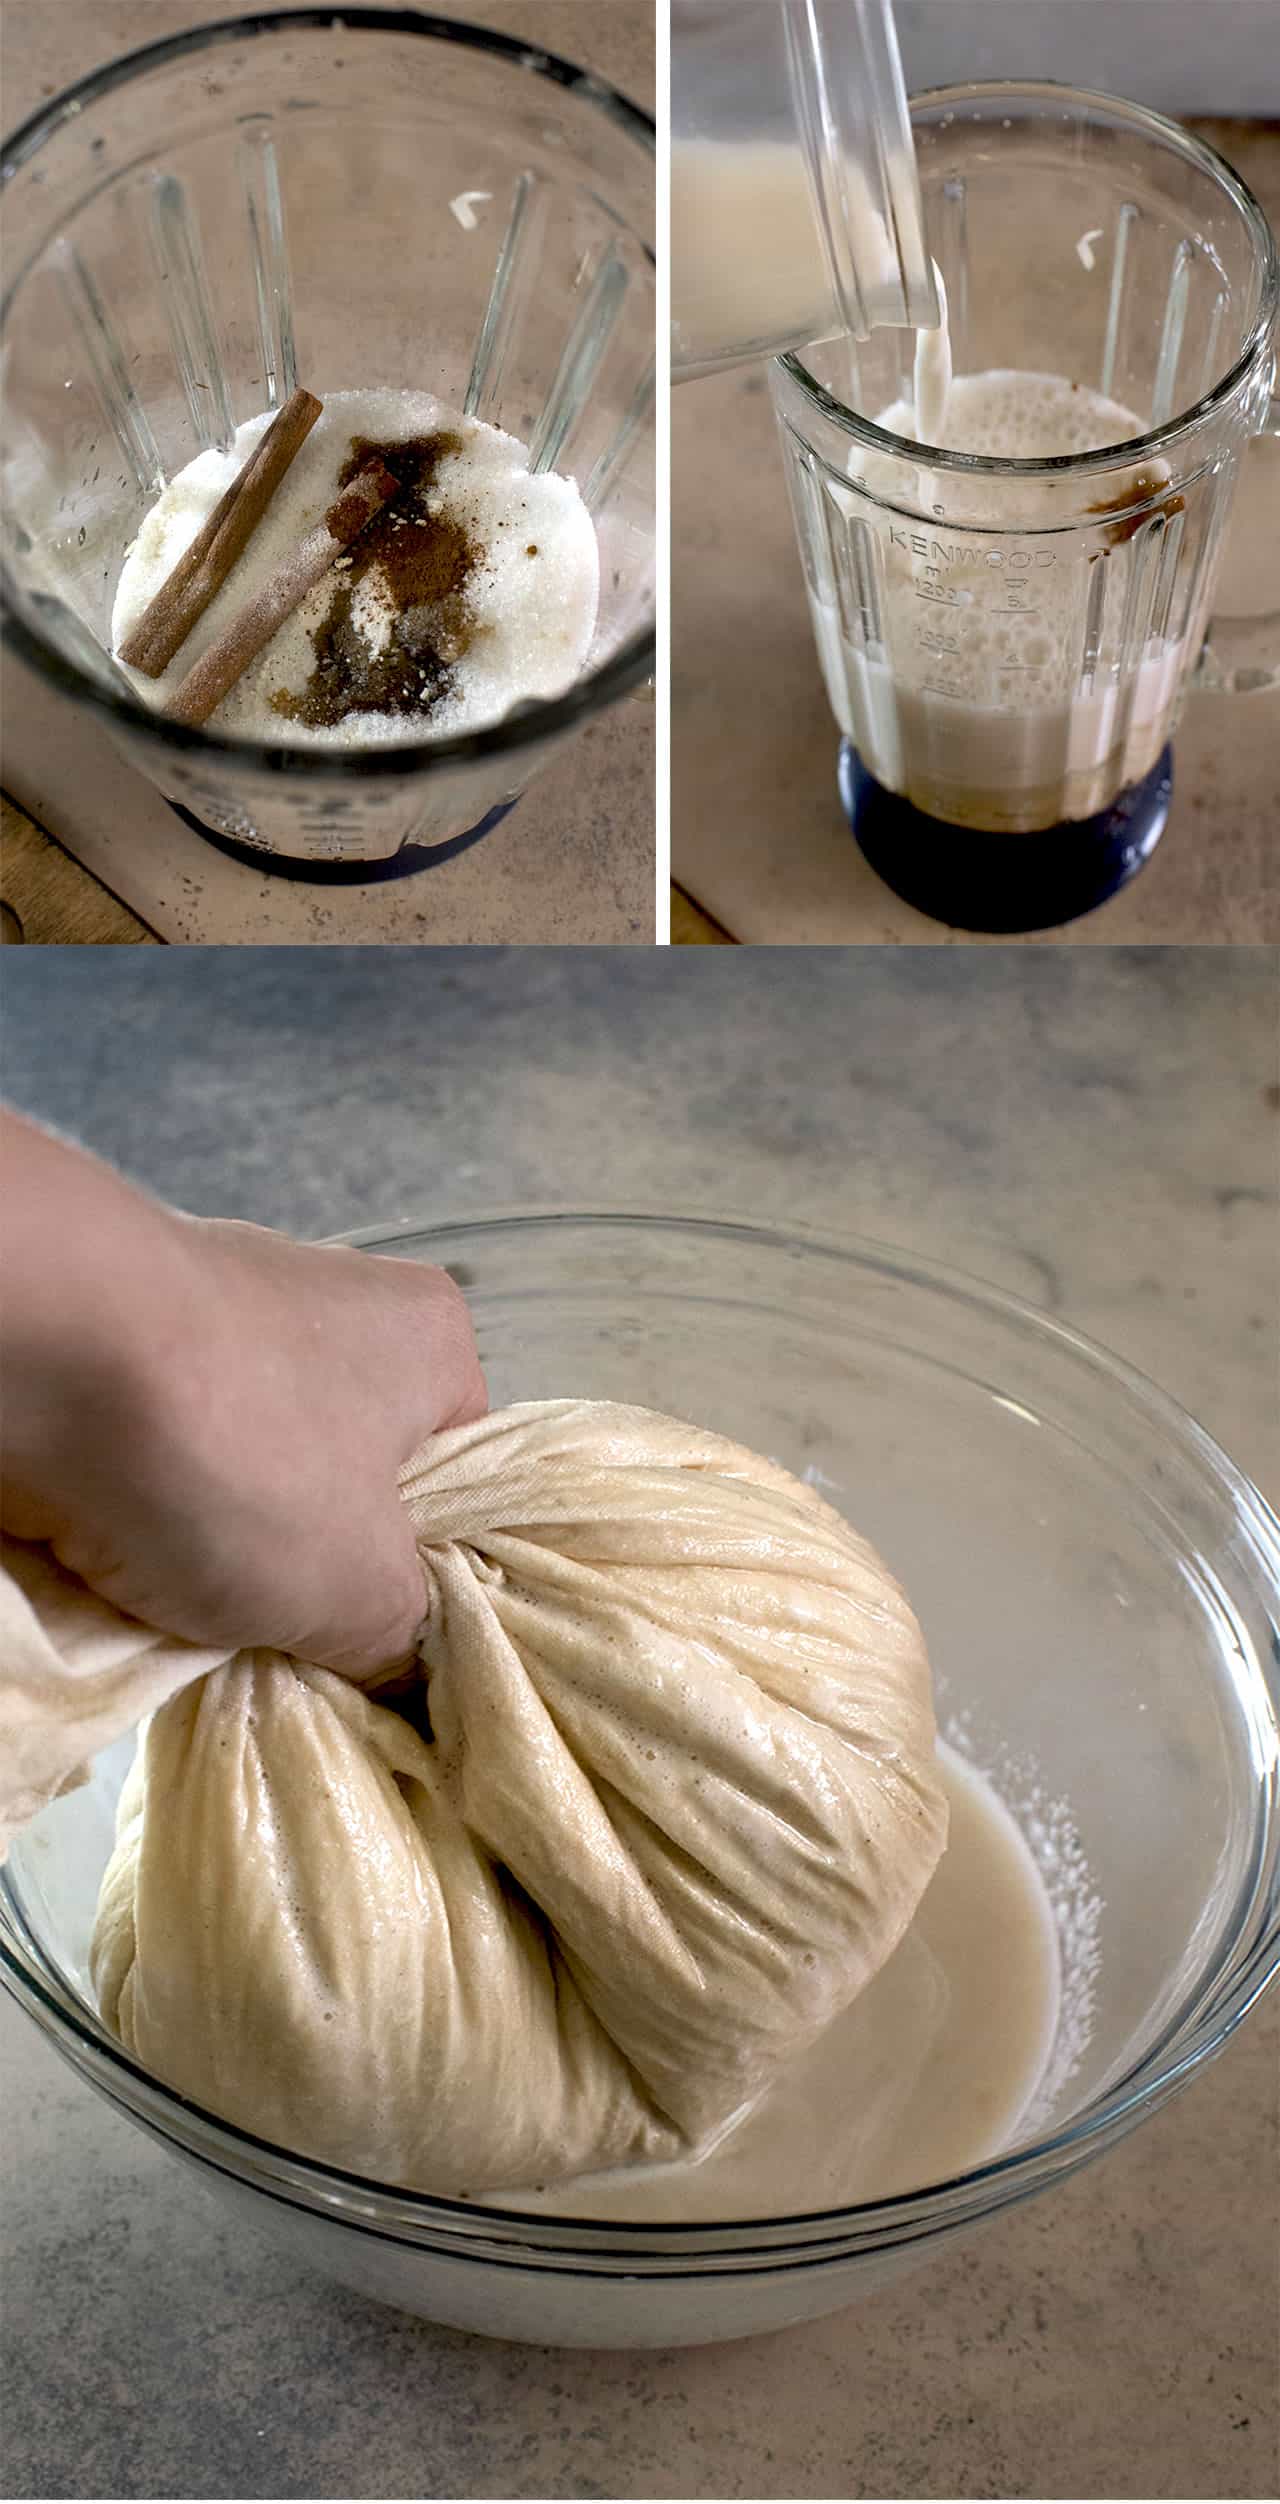 how-to-make-horchata